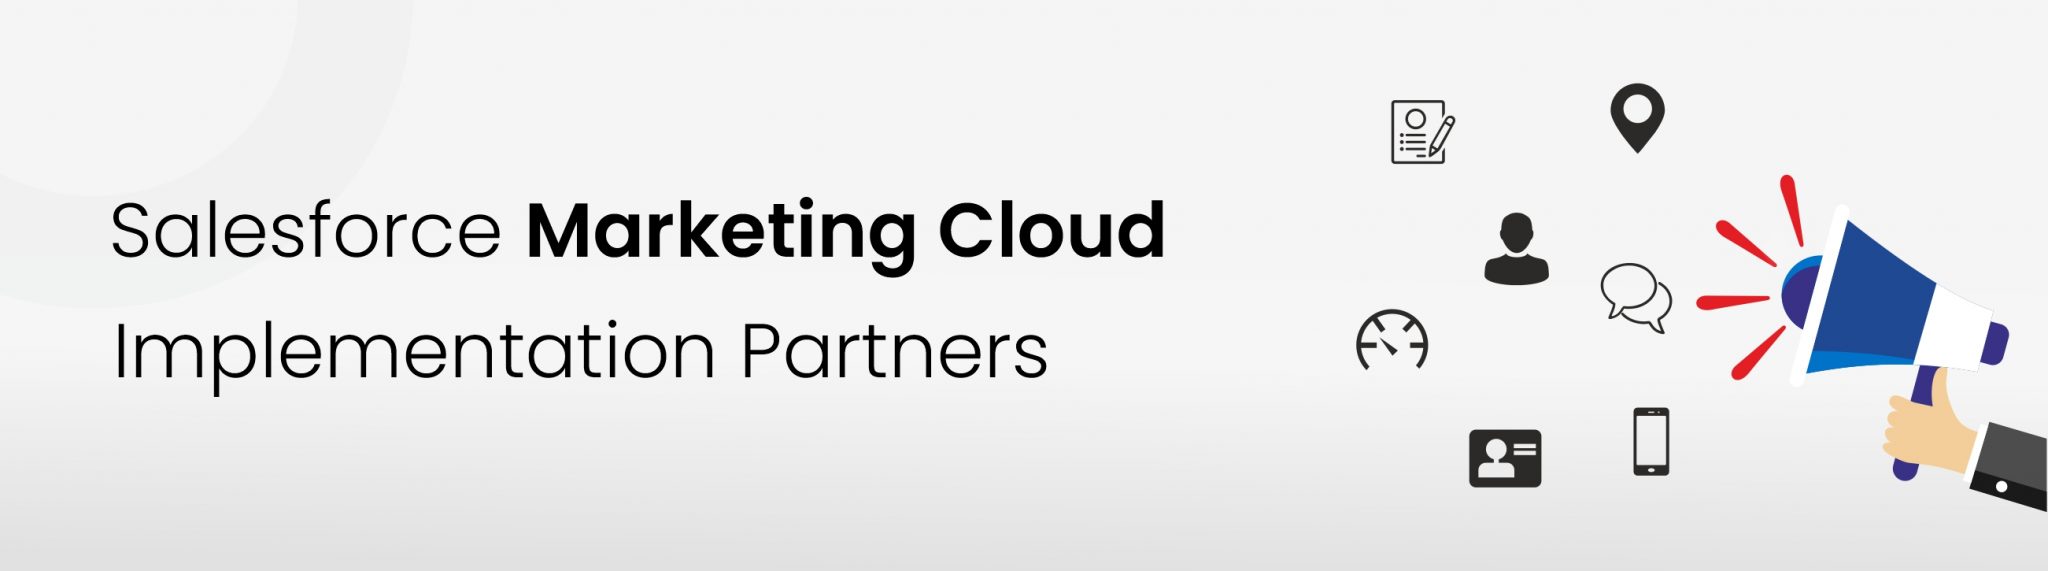 Salesforce-Marketing-Cloud-Implementation-Partners